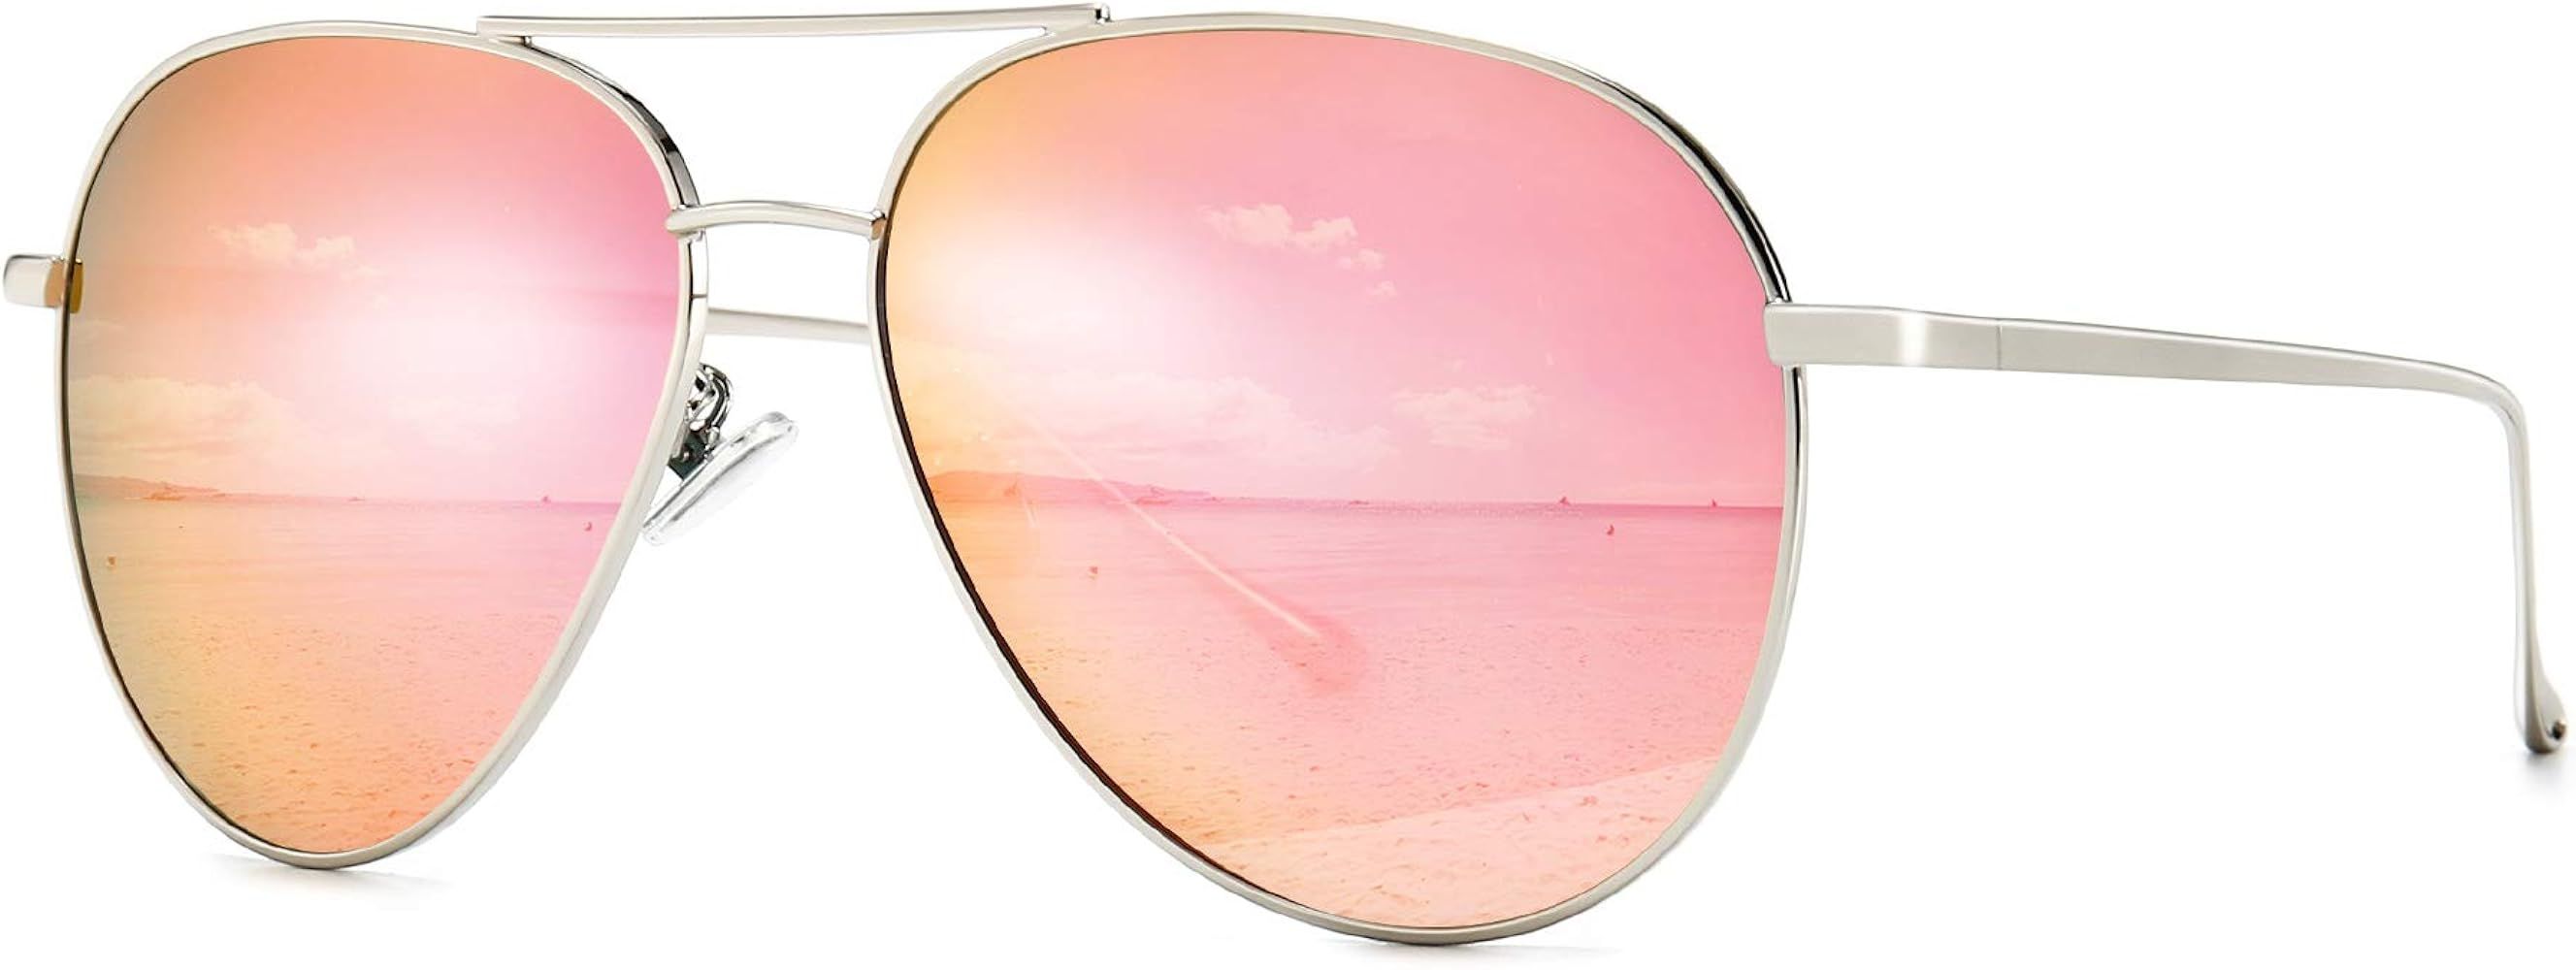 Women's Lightweight Oversized Aviator Sunglasses - Mirrored Polarized Lens | Amazon (US)